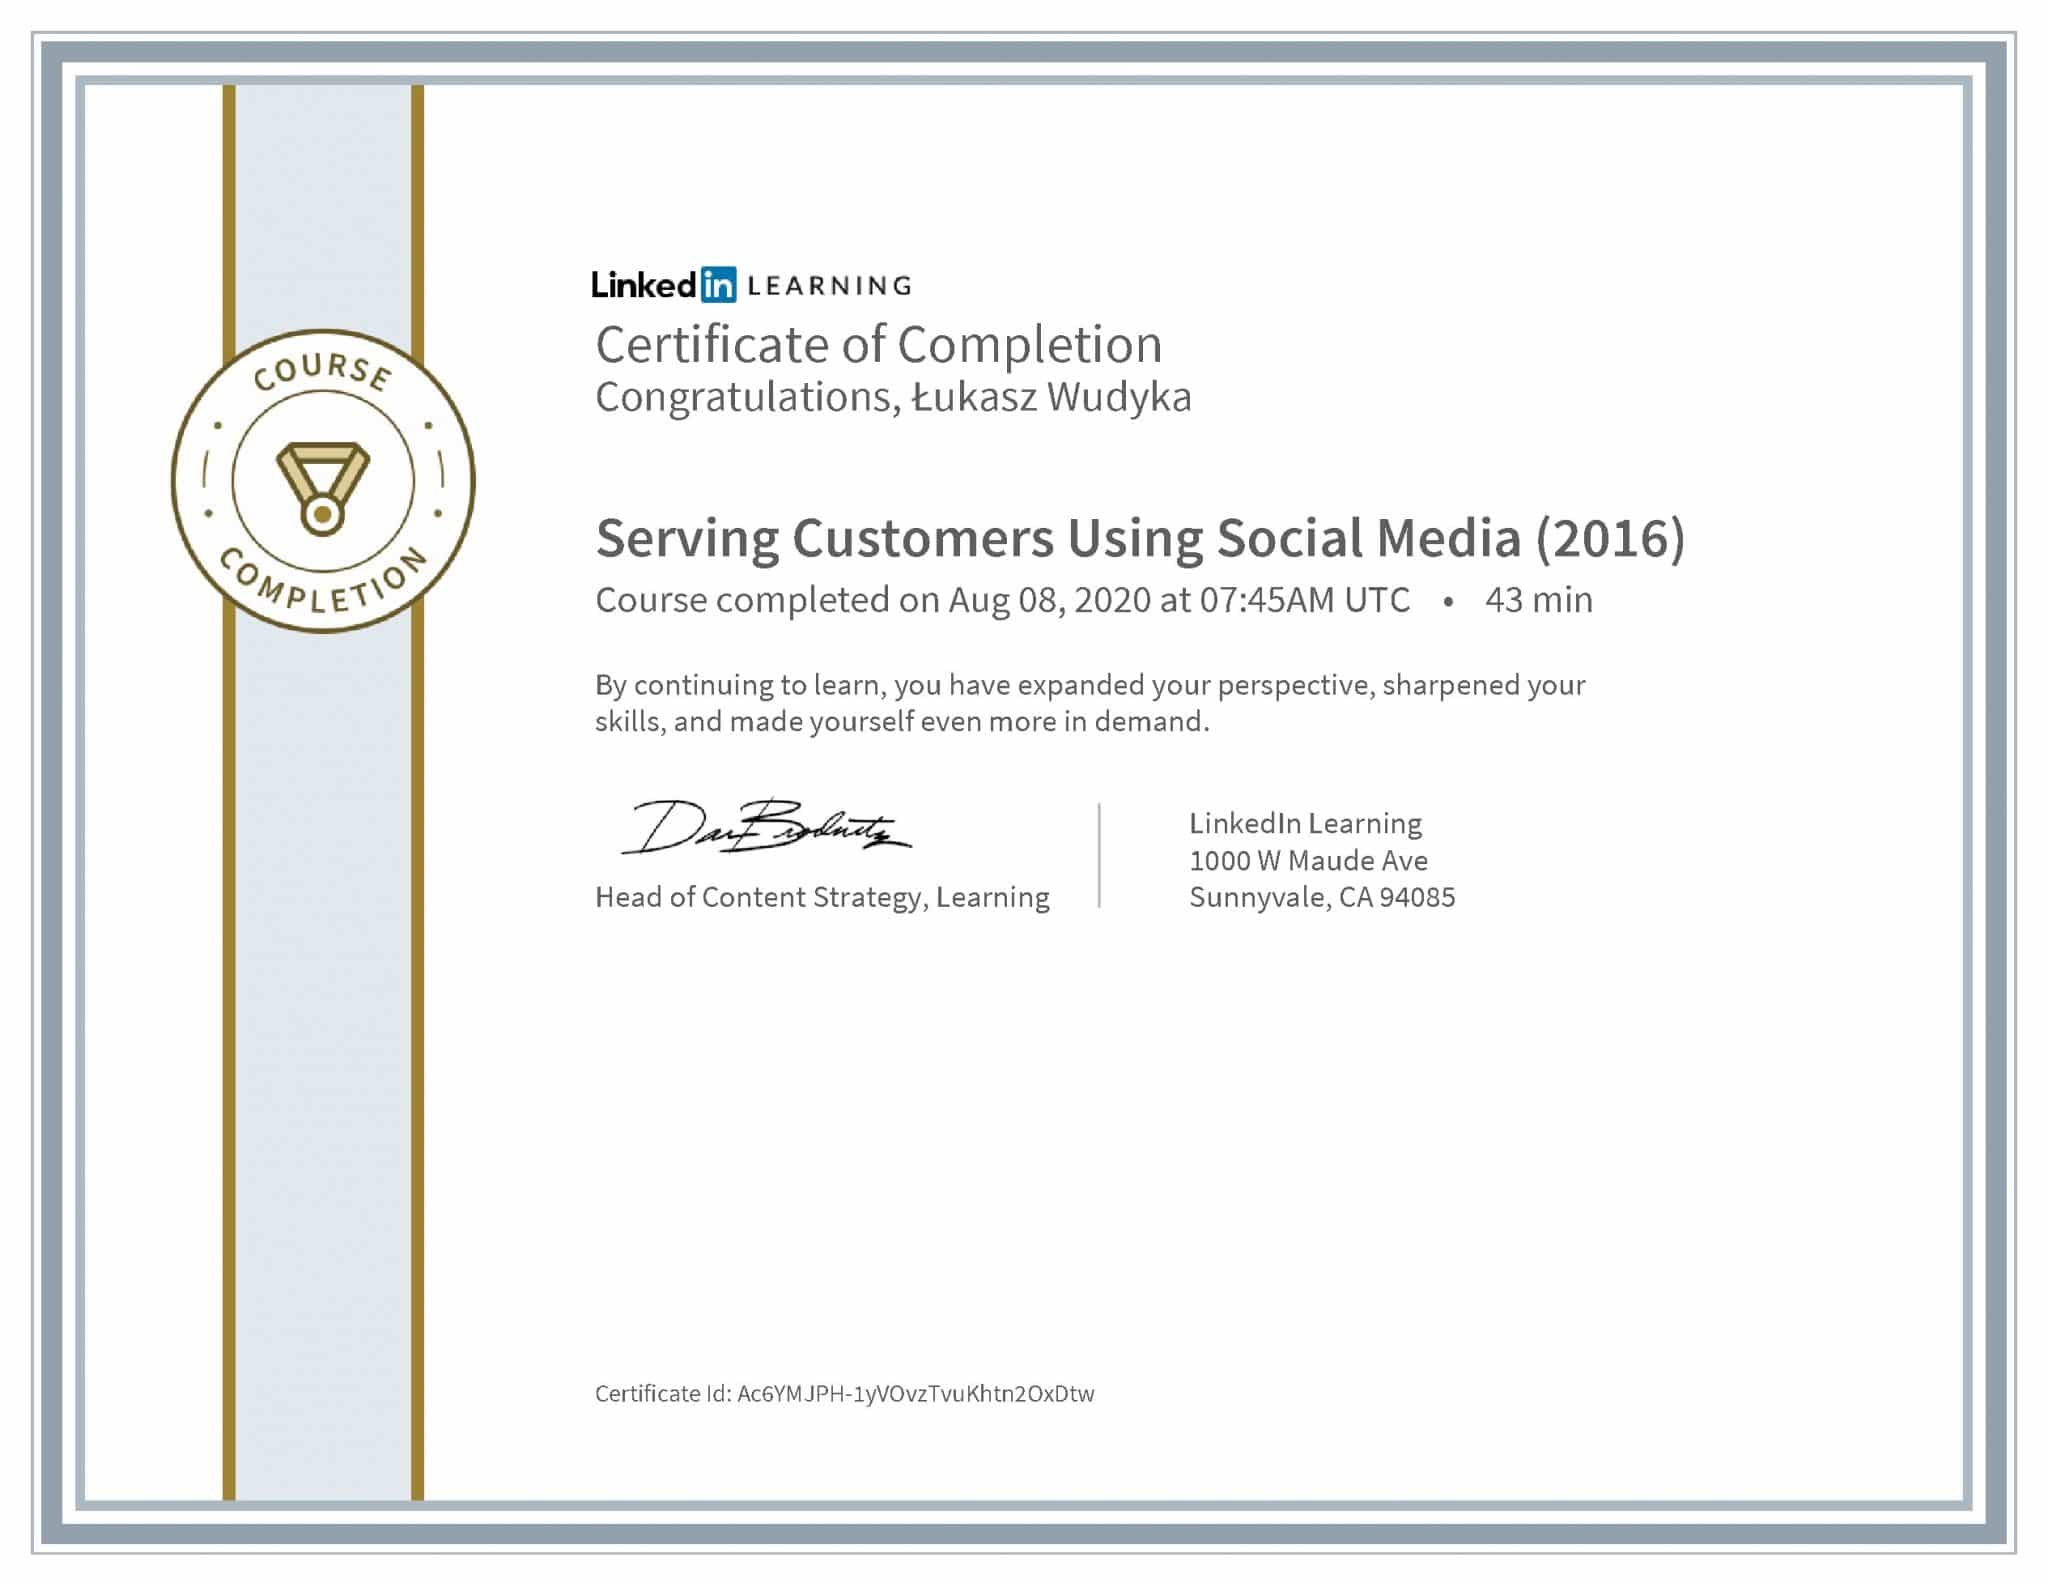 Łukasz Wudyka certyfikat LinkedIn Serving Customers Using Social Media (2016)